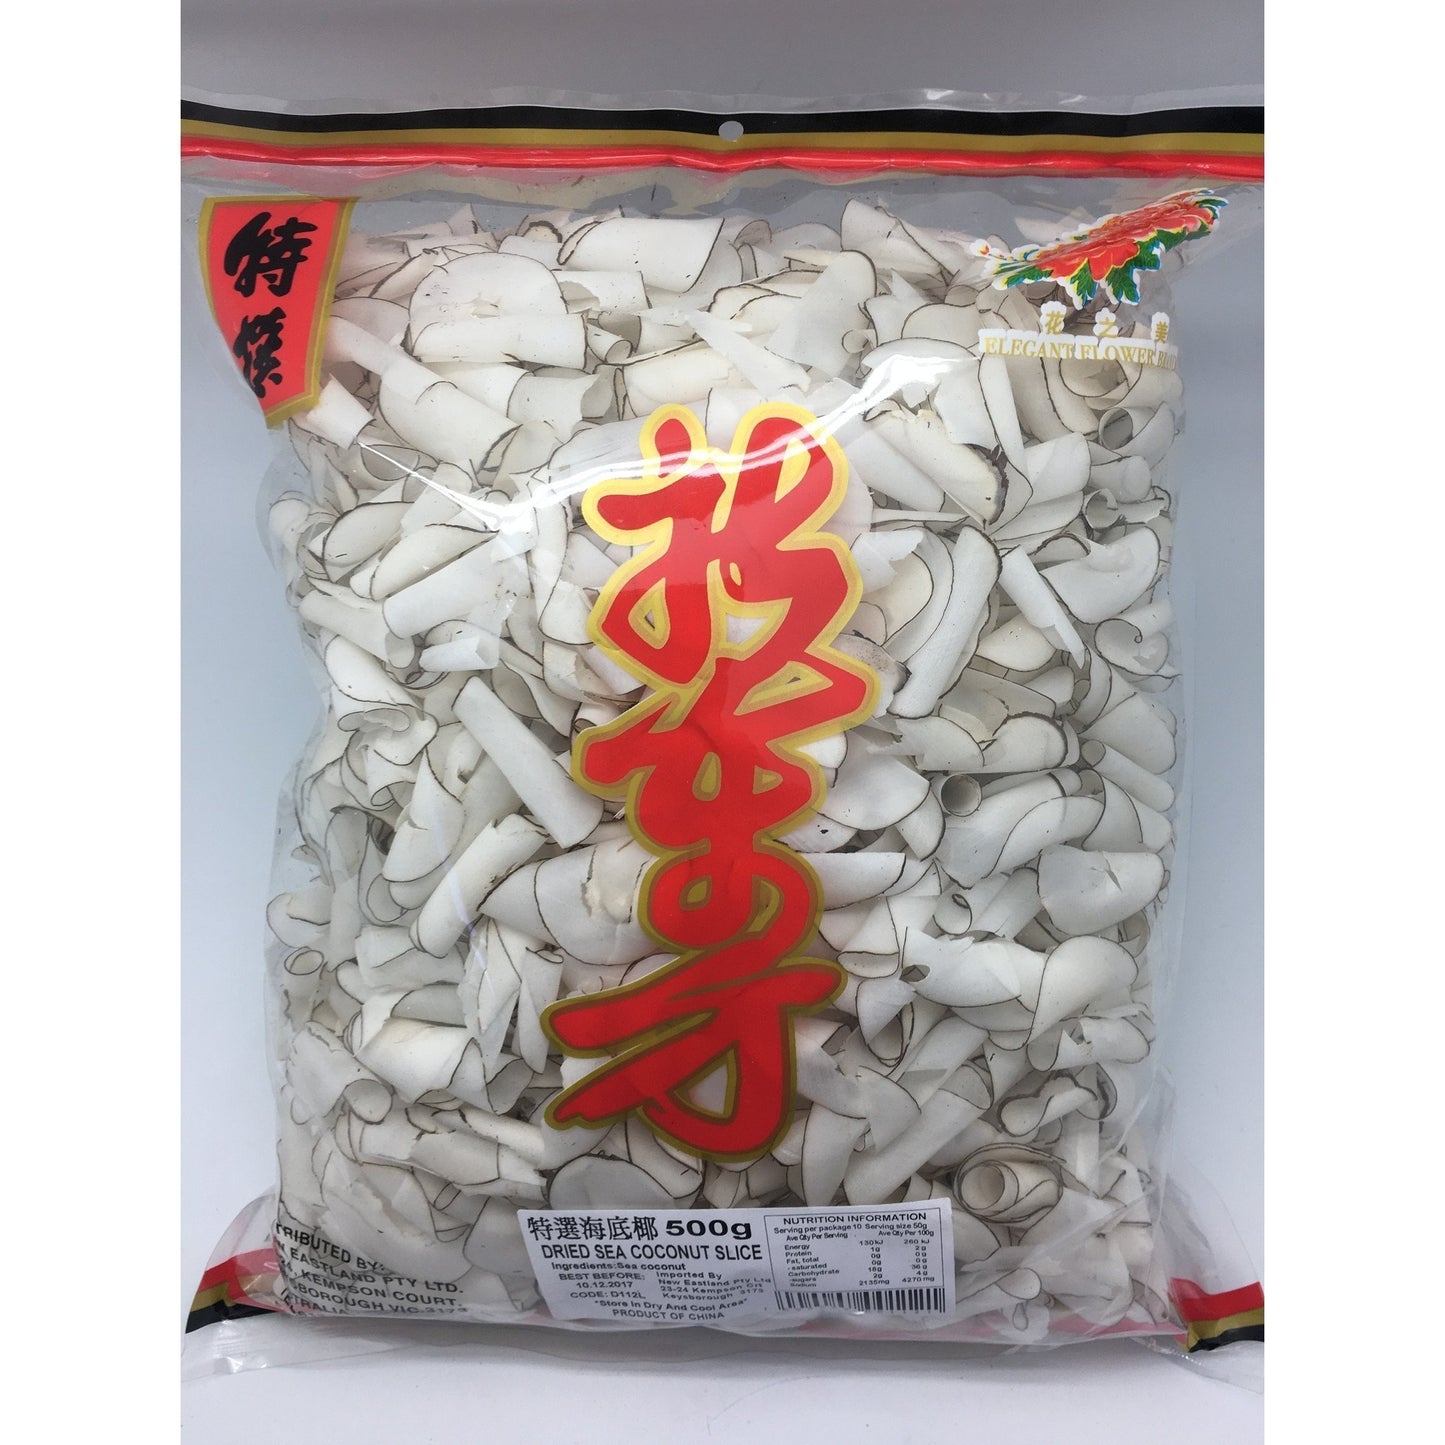 D112L New Eastland Pty Ltd - Dried Sea Coconut Slice 500g - 25 bags / 1 CTN - New Eastland Pty Ltd - Asian food wholesalers